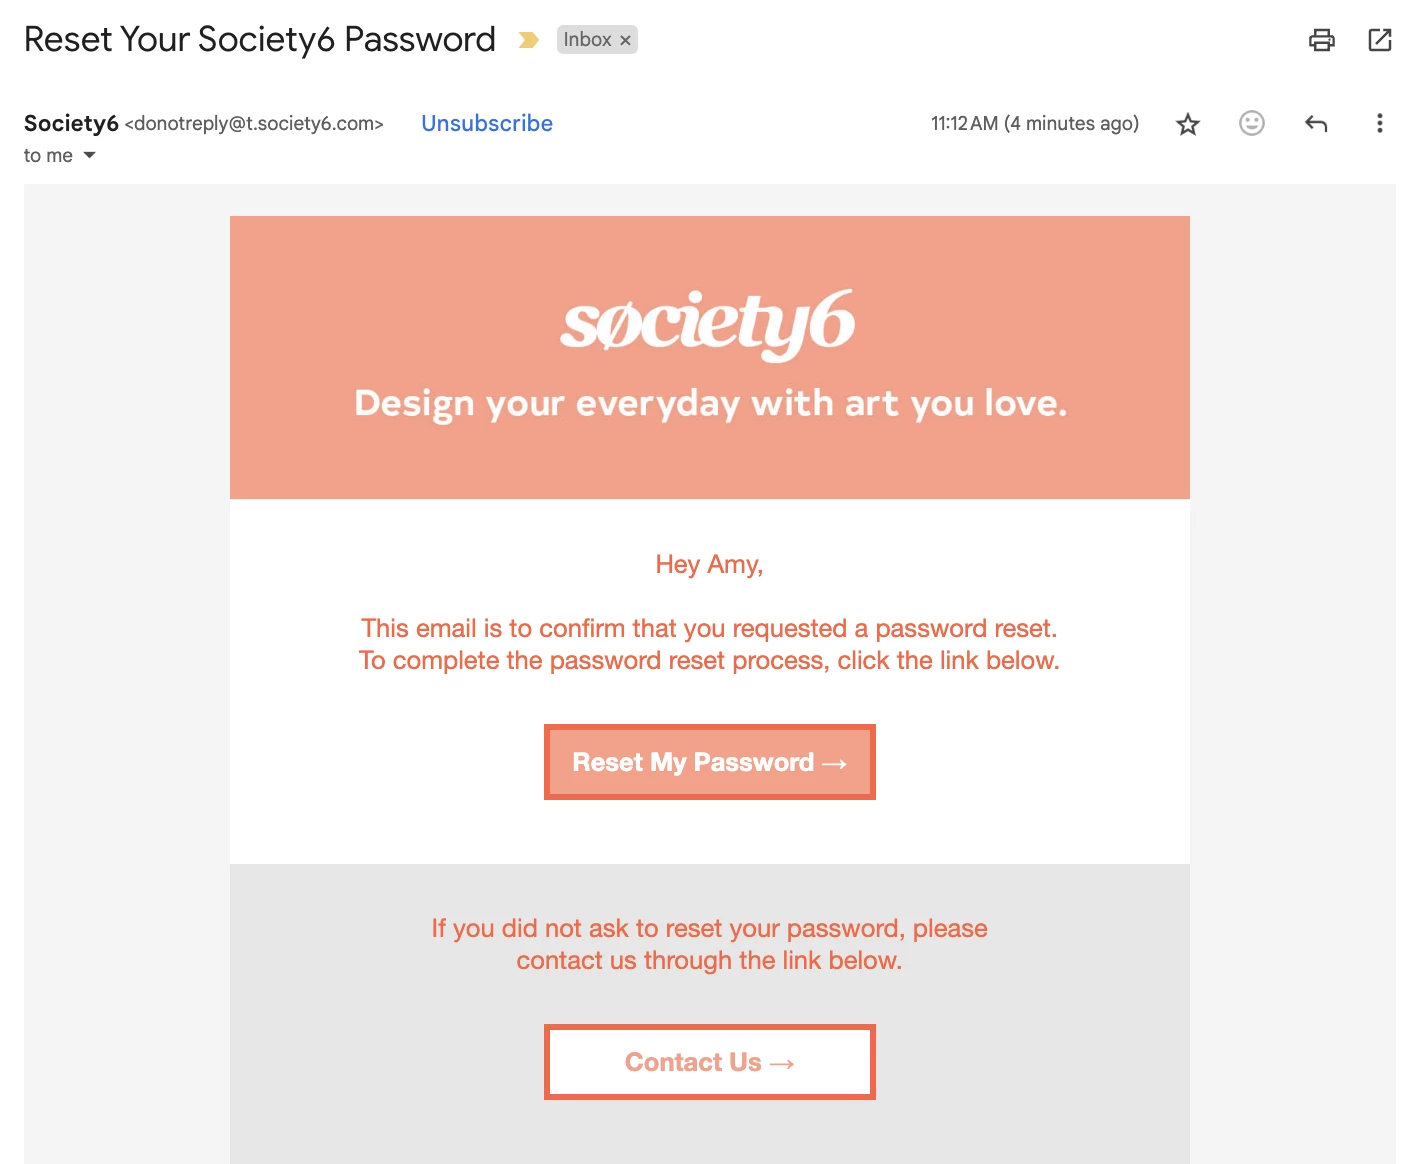 Society6 password reset email